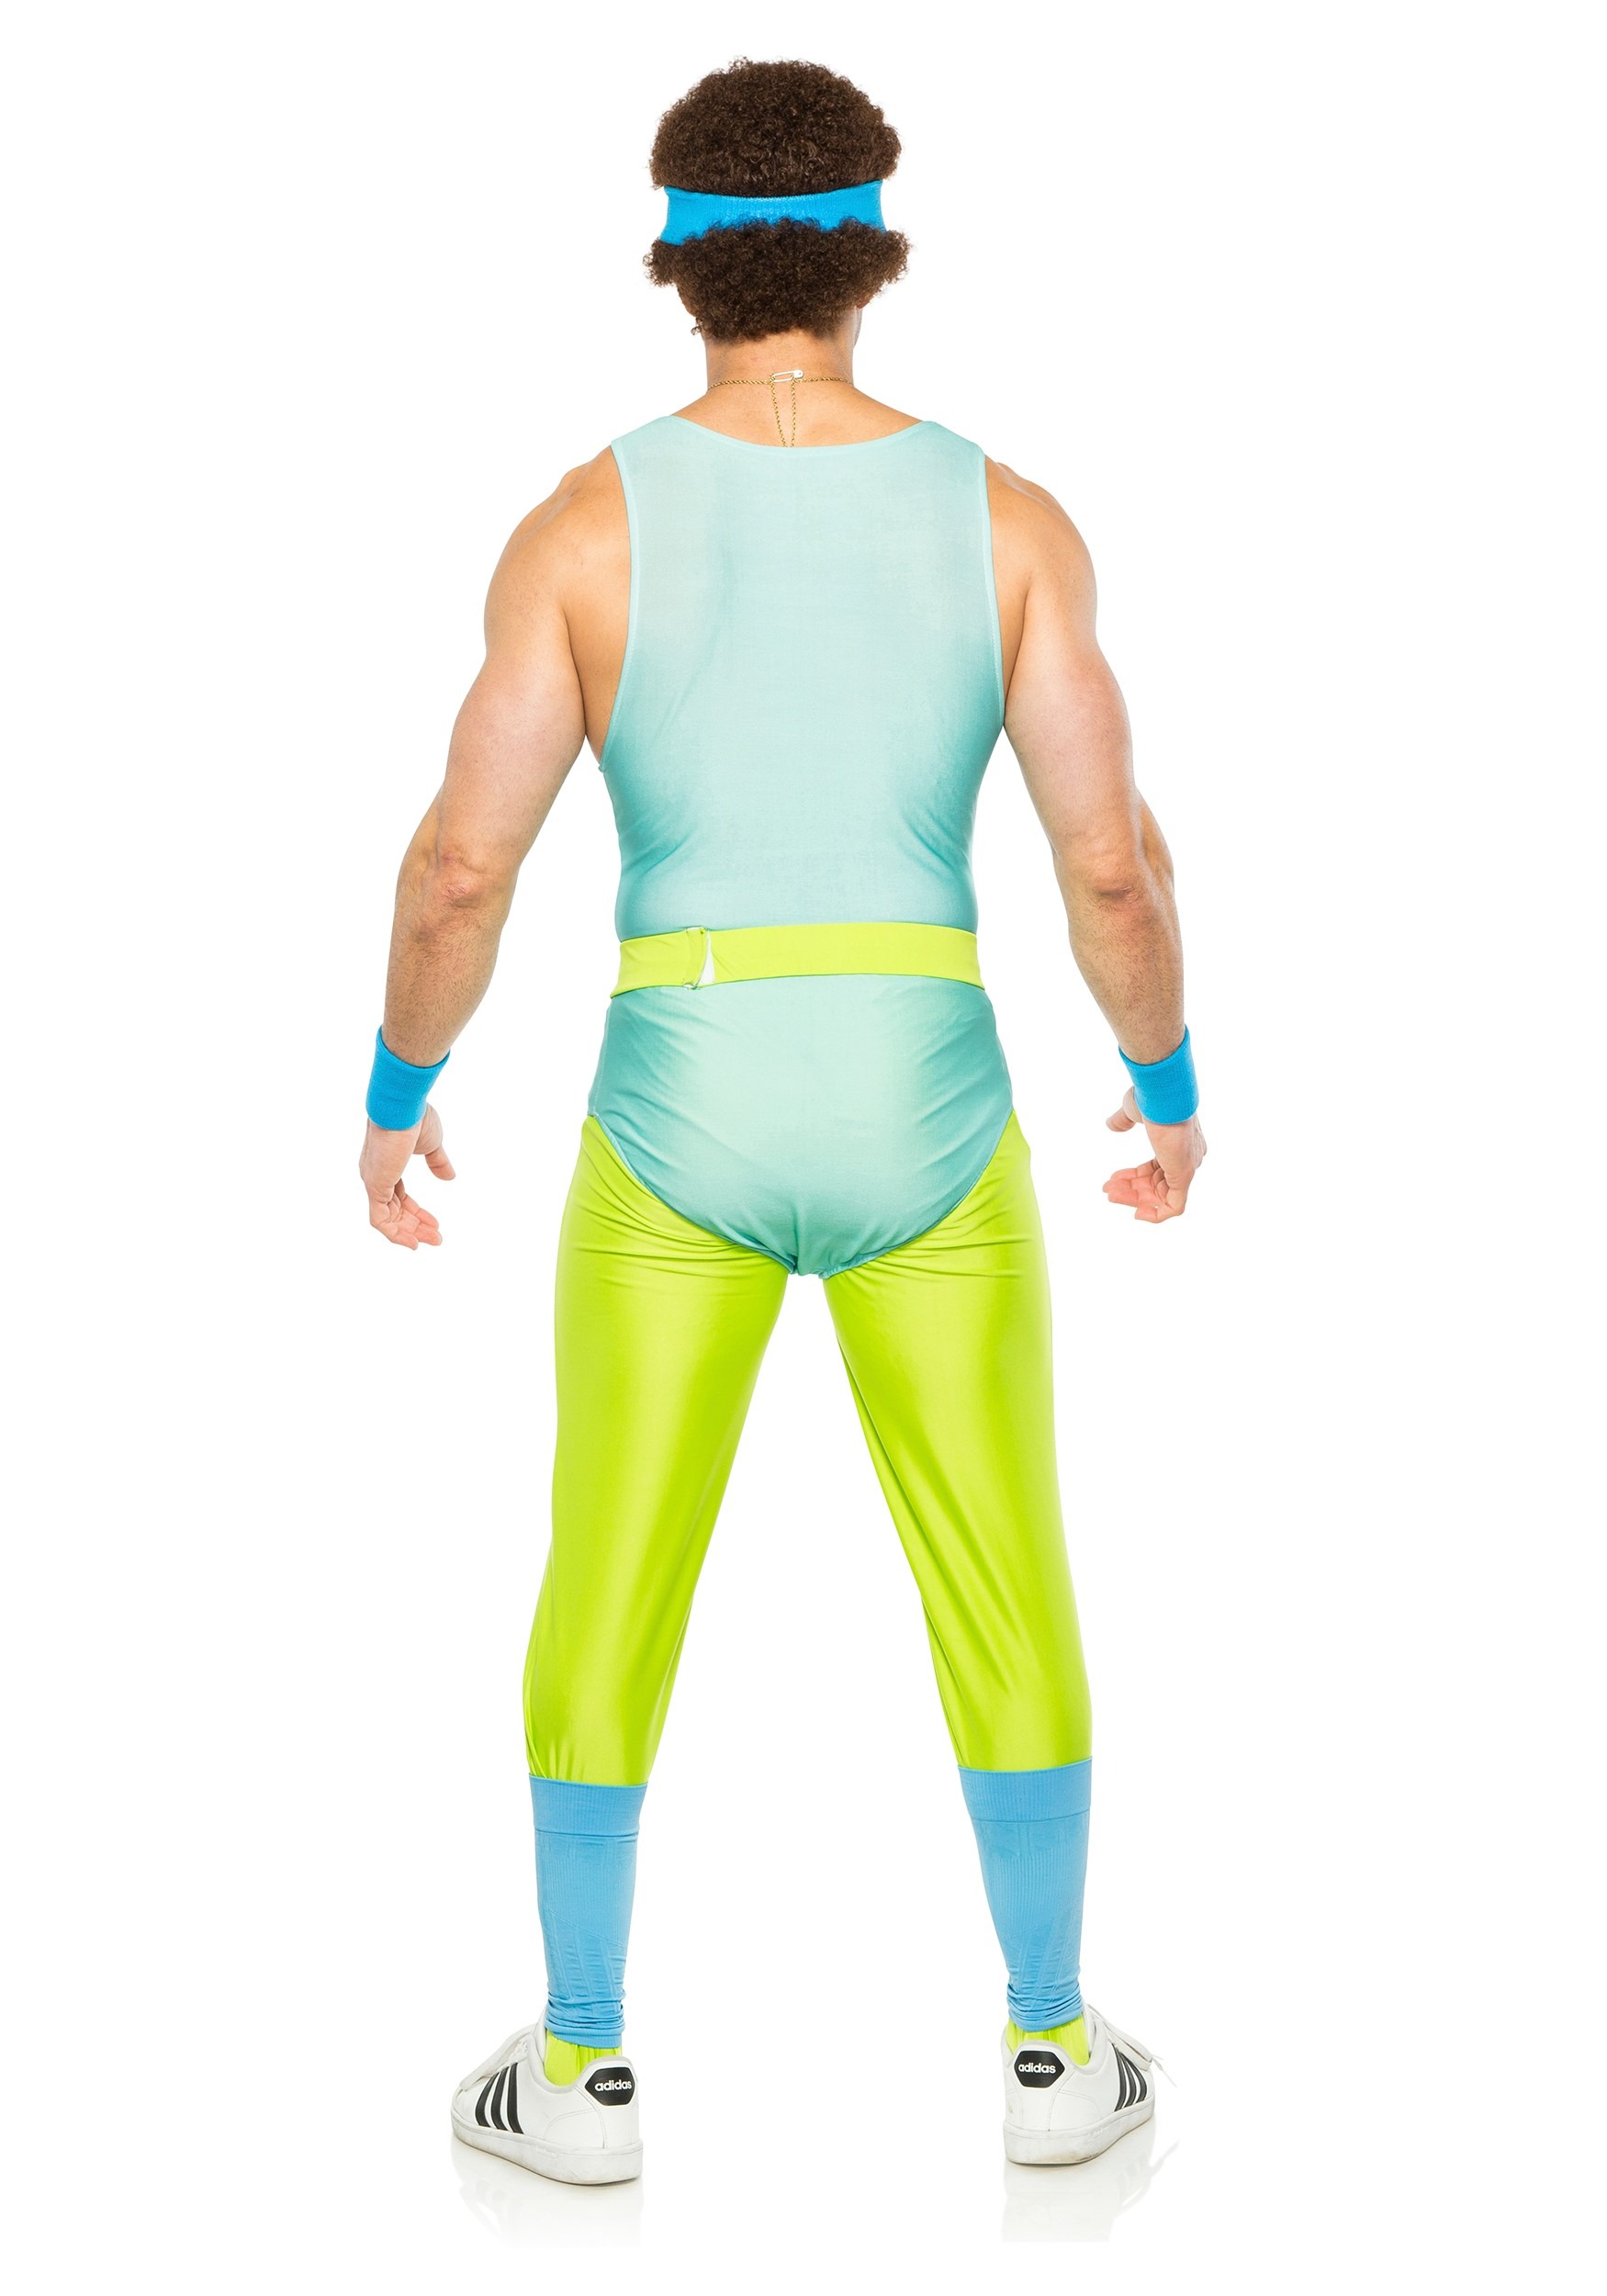 Mens 80's Gym Instructor Costume